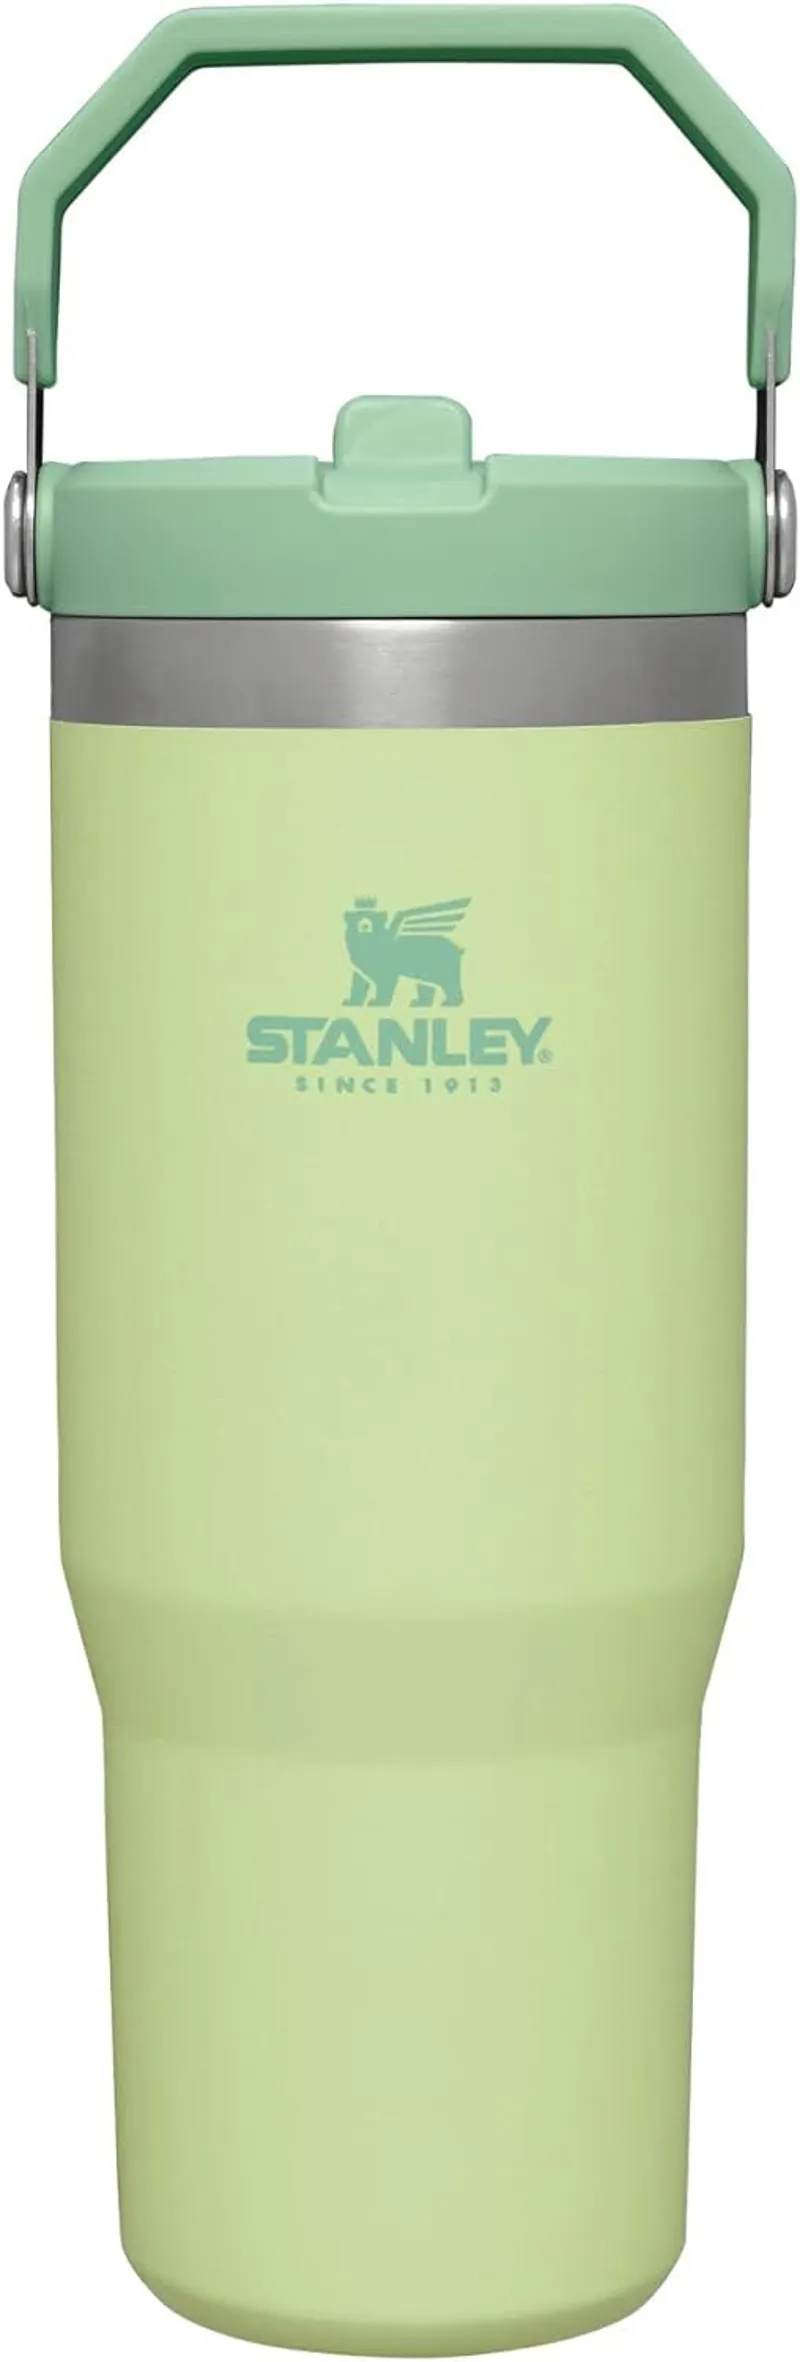 Stanley The IceFlow Flip Straw Tumbler Citron 0.89L - Stanley The IceFlow  Flip Straw Tumbler Citron 0.89L